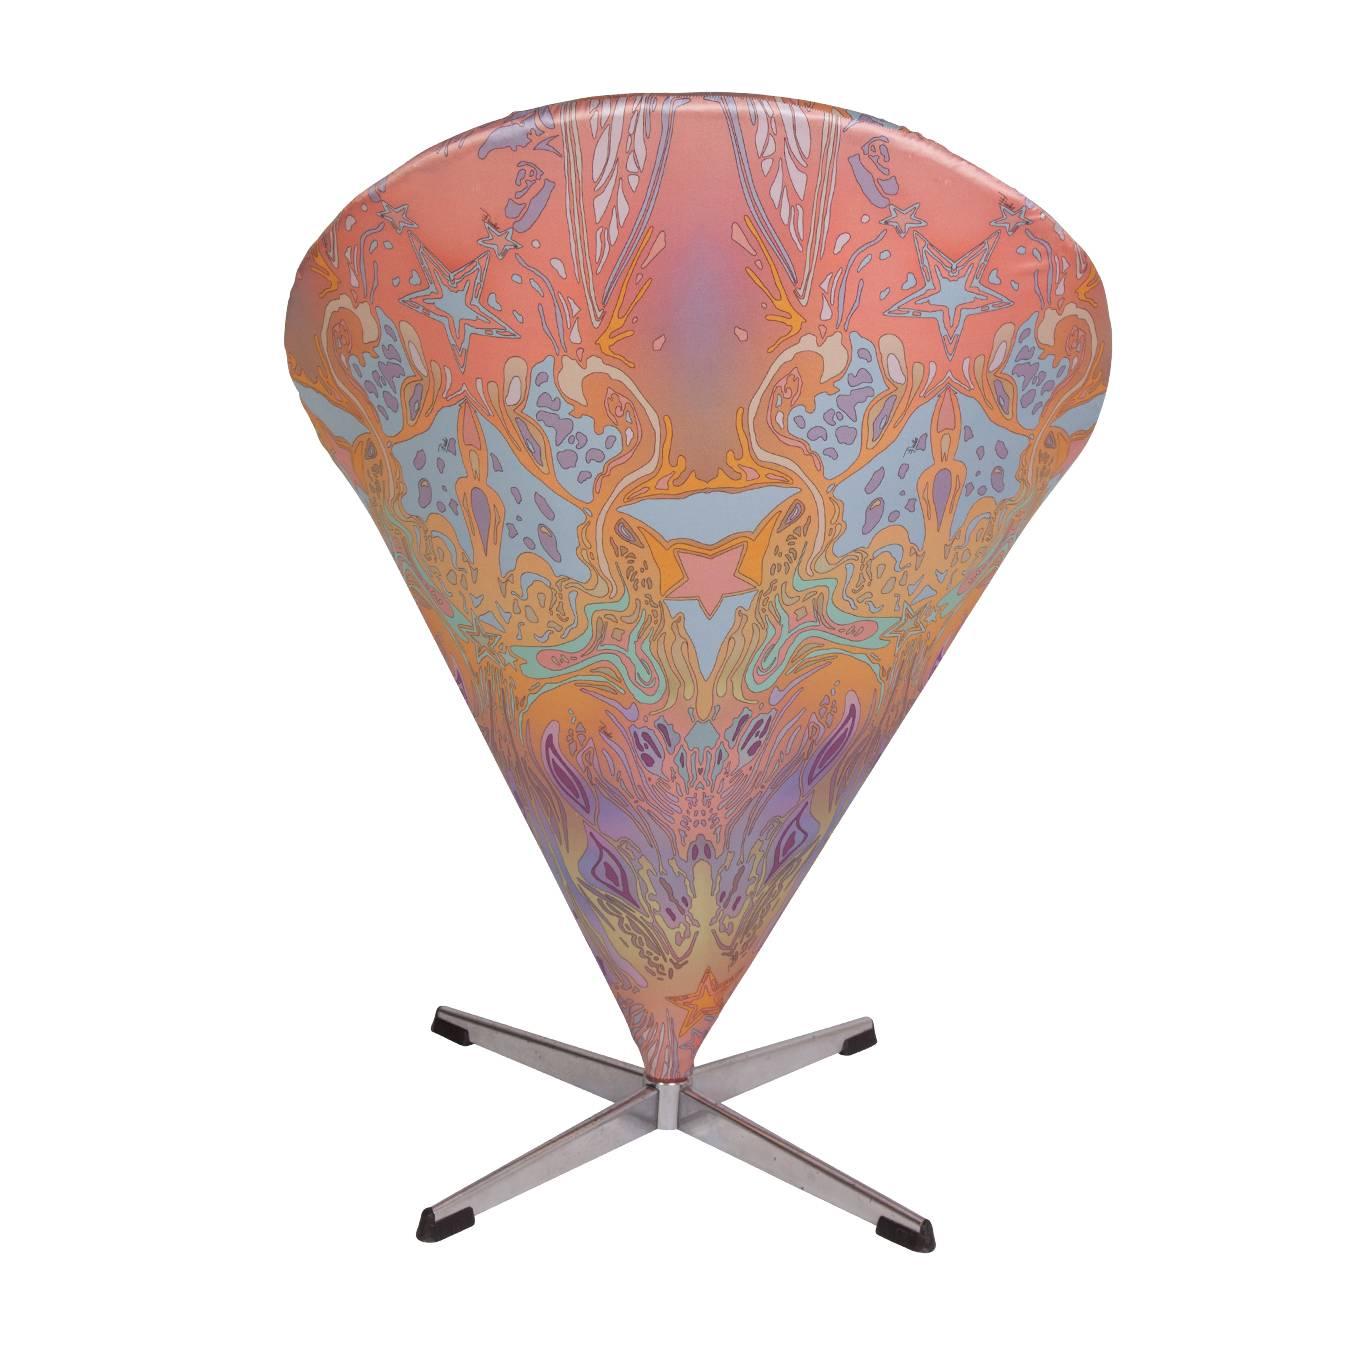 Verner Panton cone chair in silk.